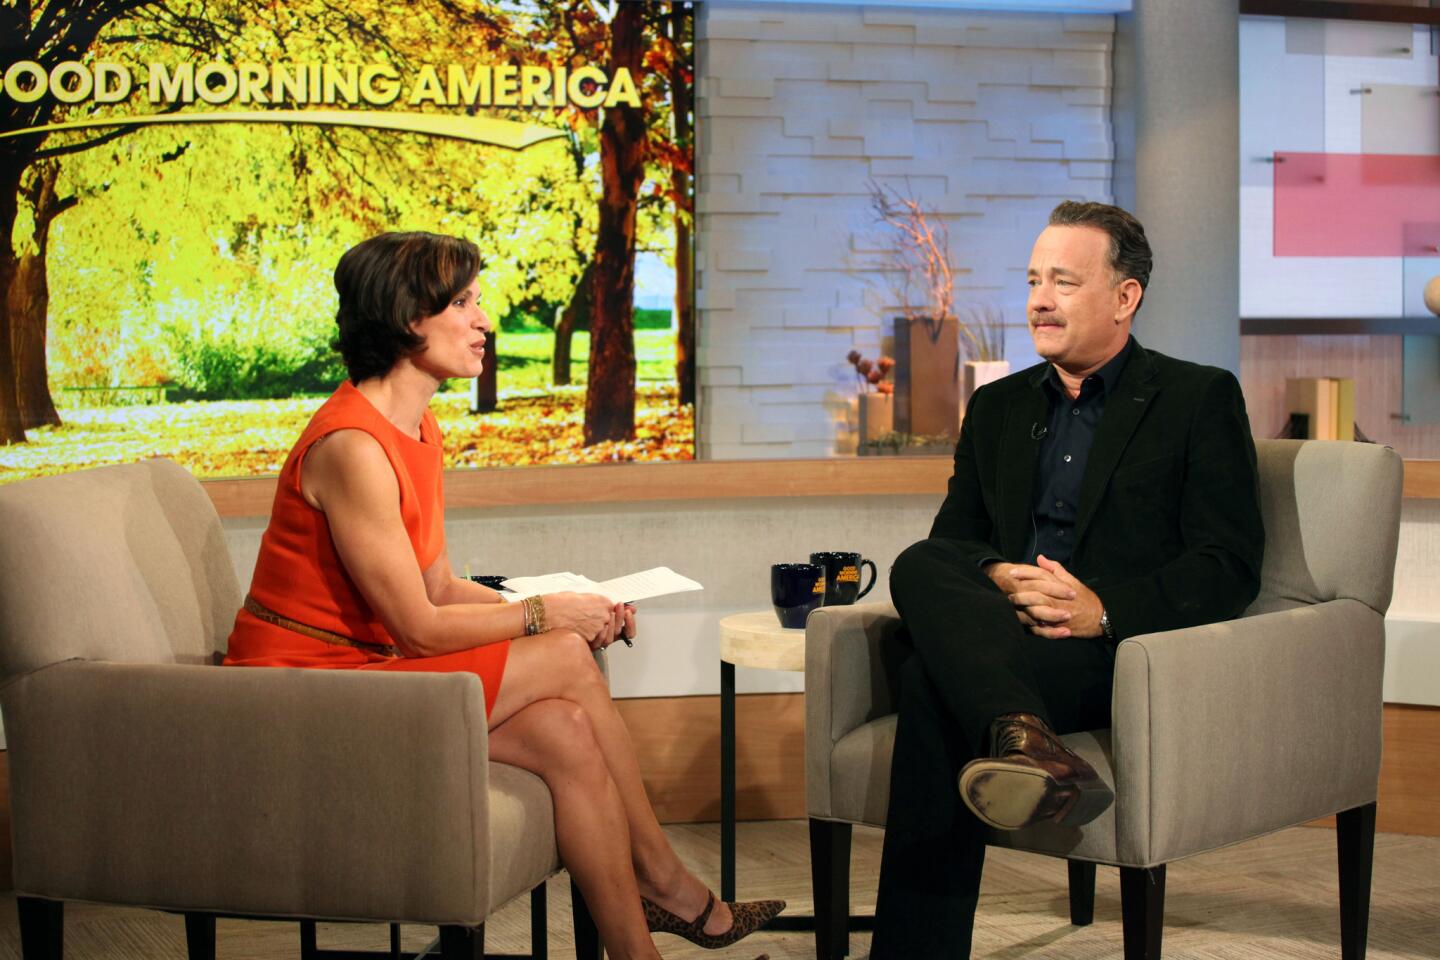 Tom Hanks drops F-bomb on 'Good Morning America'